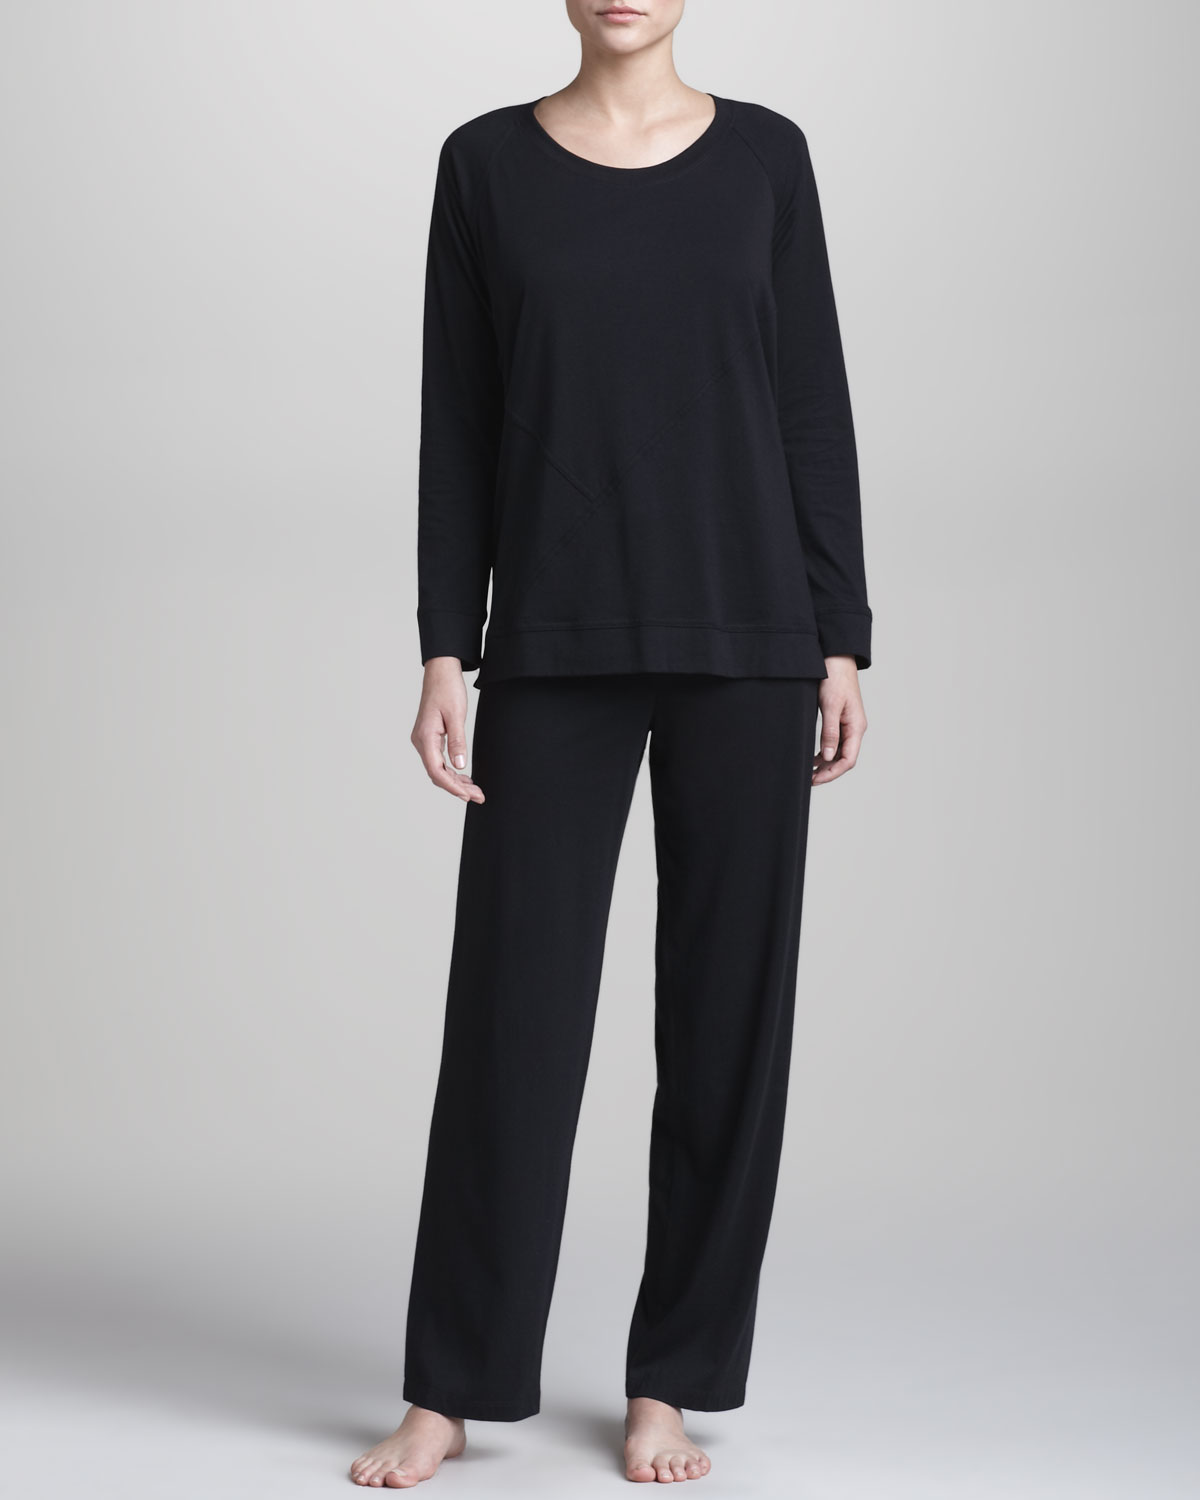 Donna karan new york Pima Cotton Pajamas in Black | Lyst